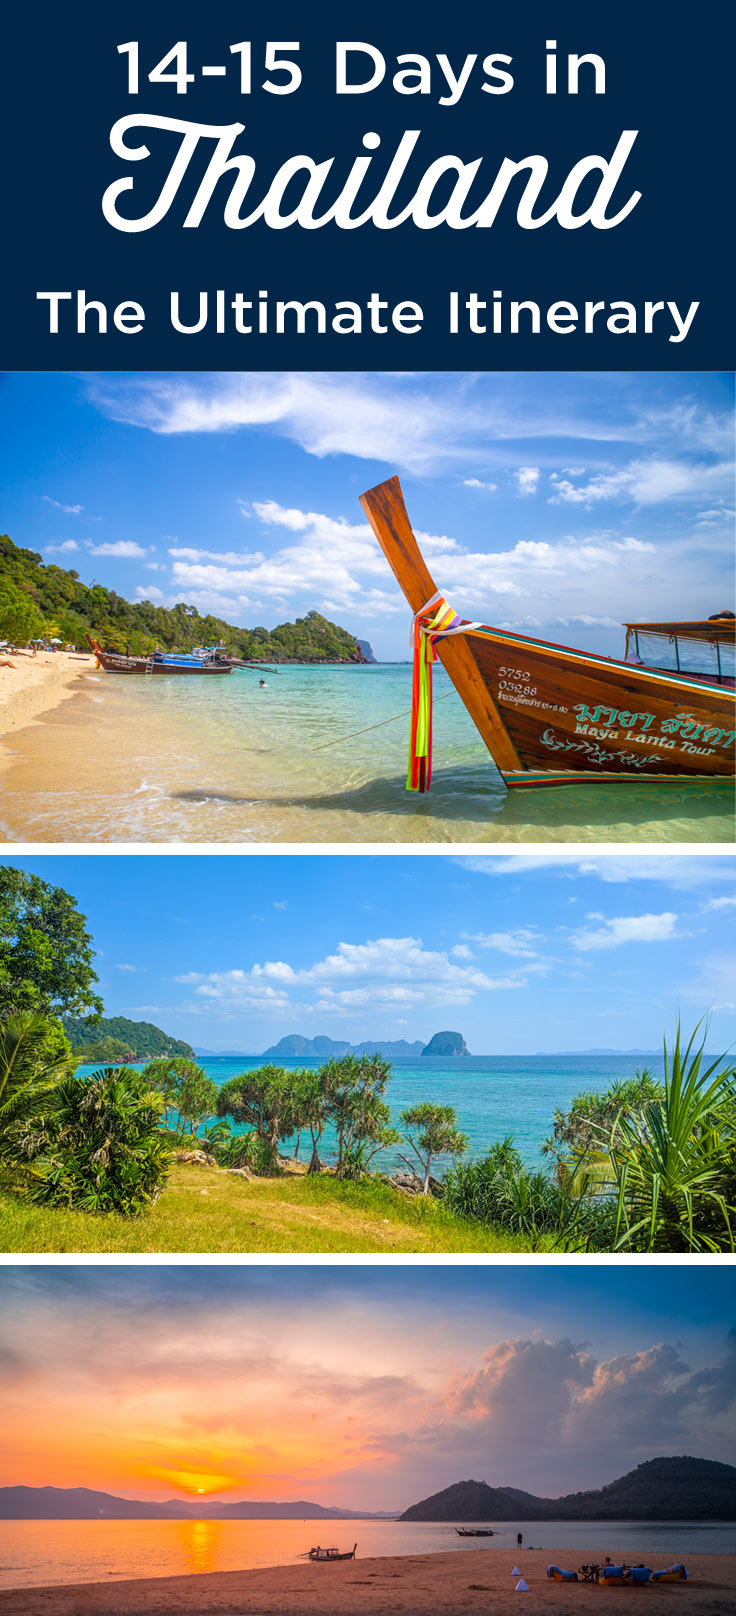 Thailand itinerary 14-15 days